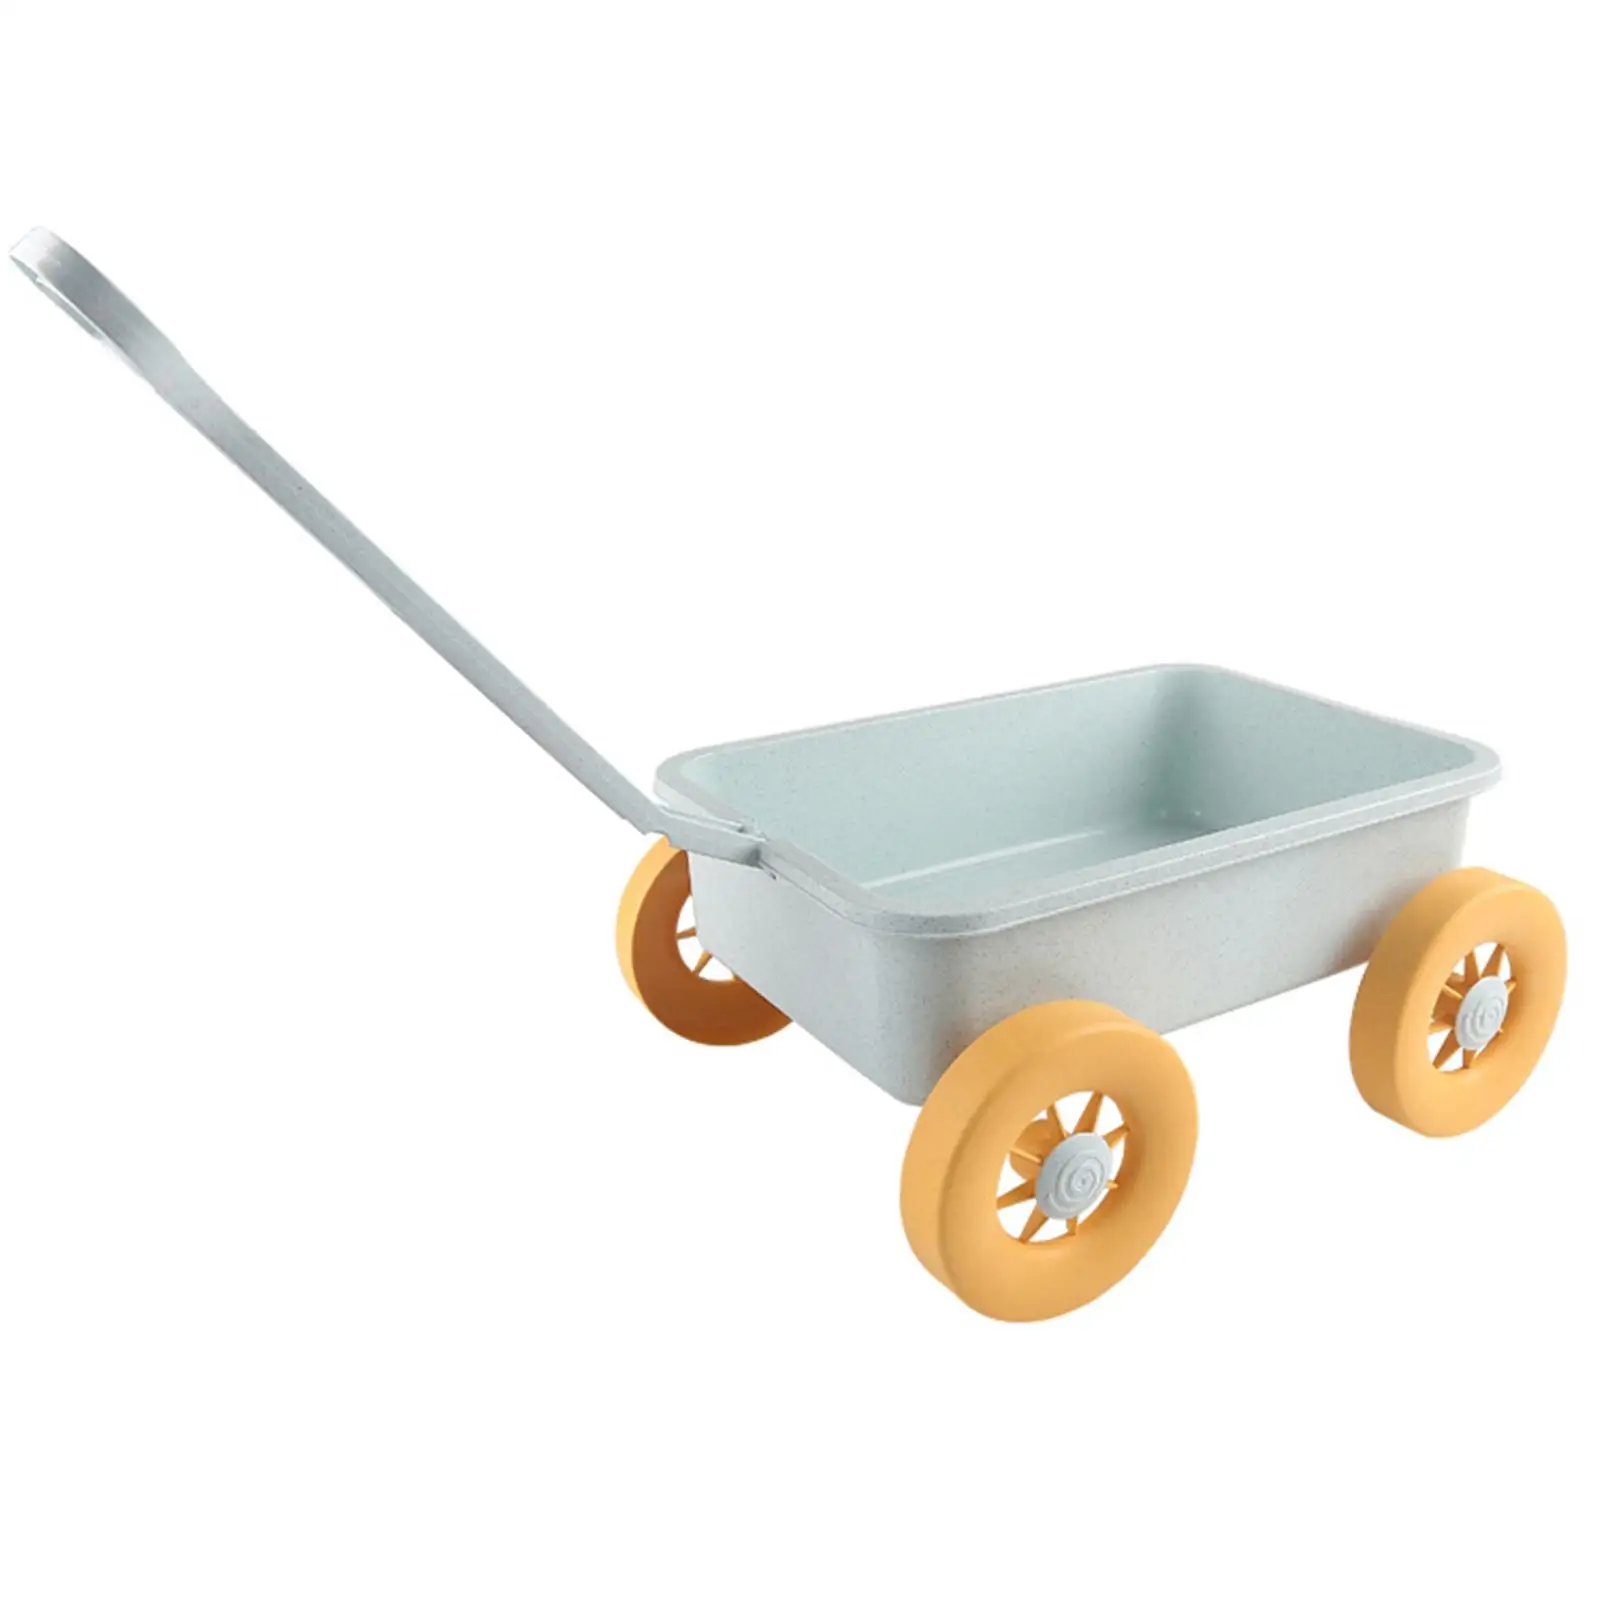 Kid Pull Toy Motor Vehicles Beach Toys Small Wagon Toys Wheelbarrow Garden Wagon Tools Toy for Holding Small Toys